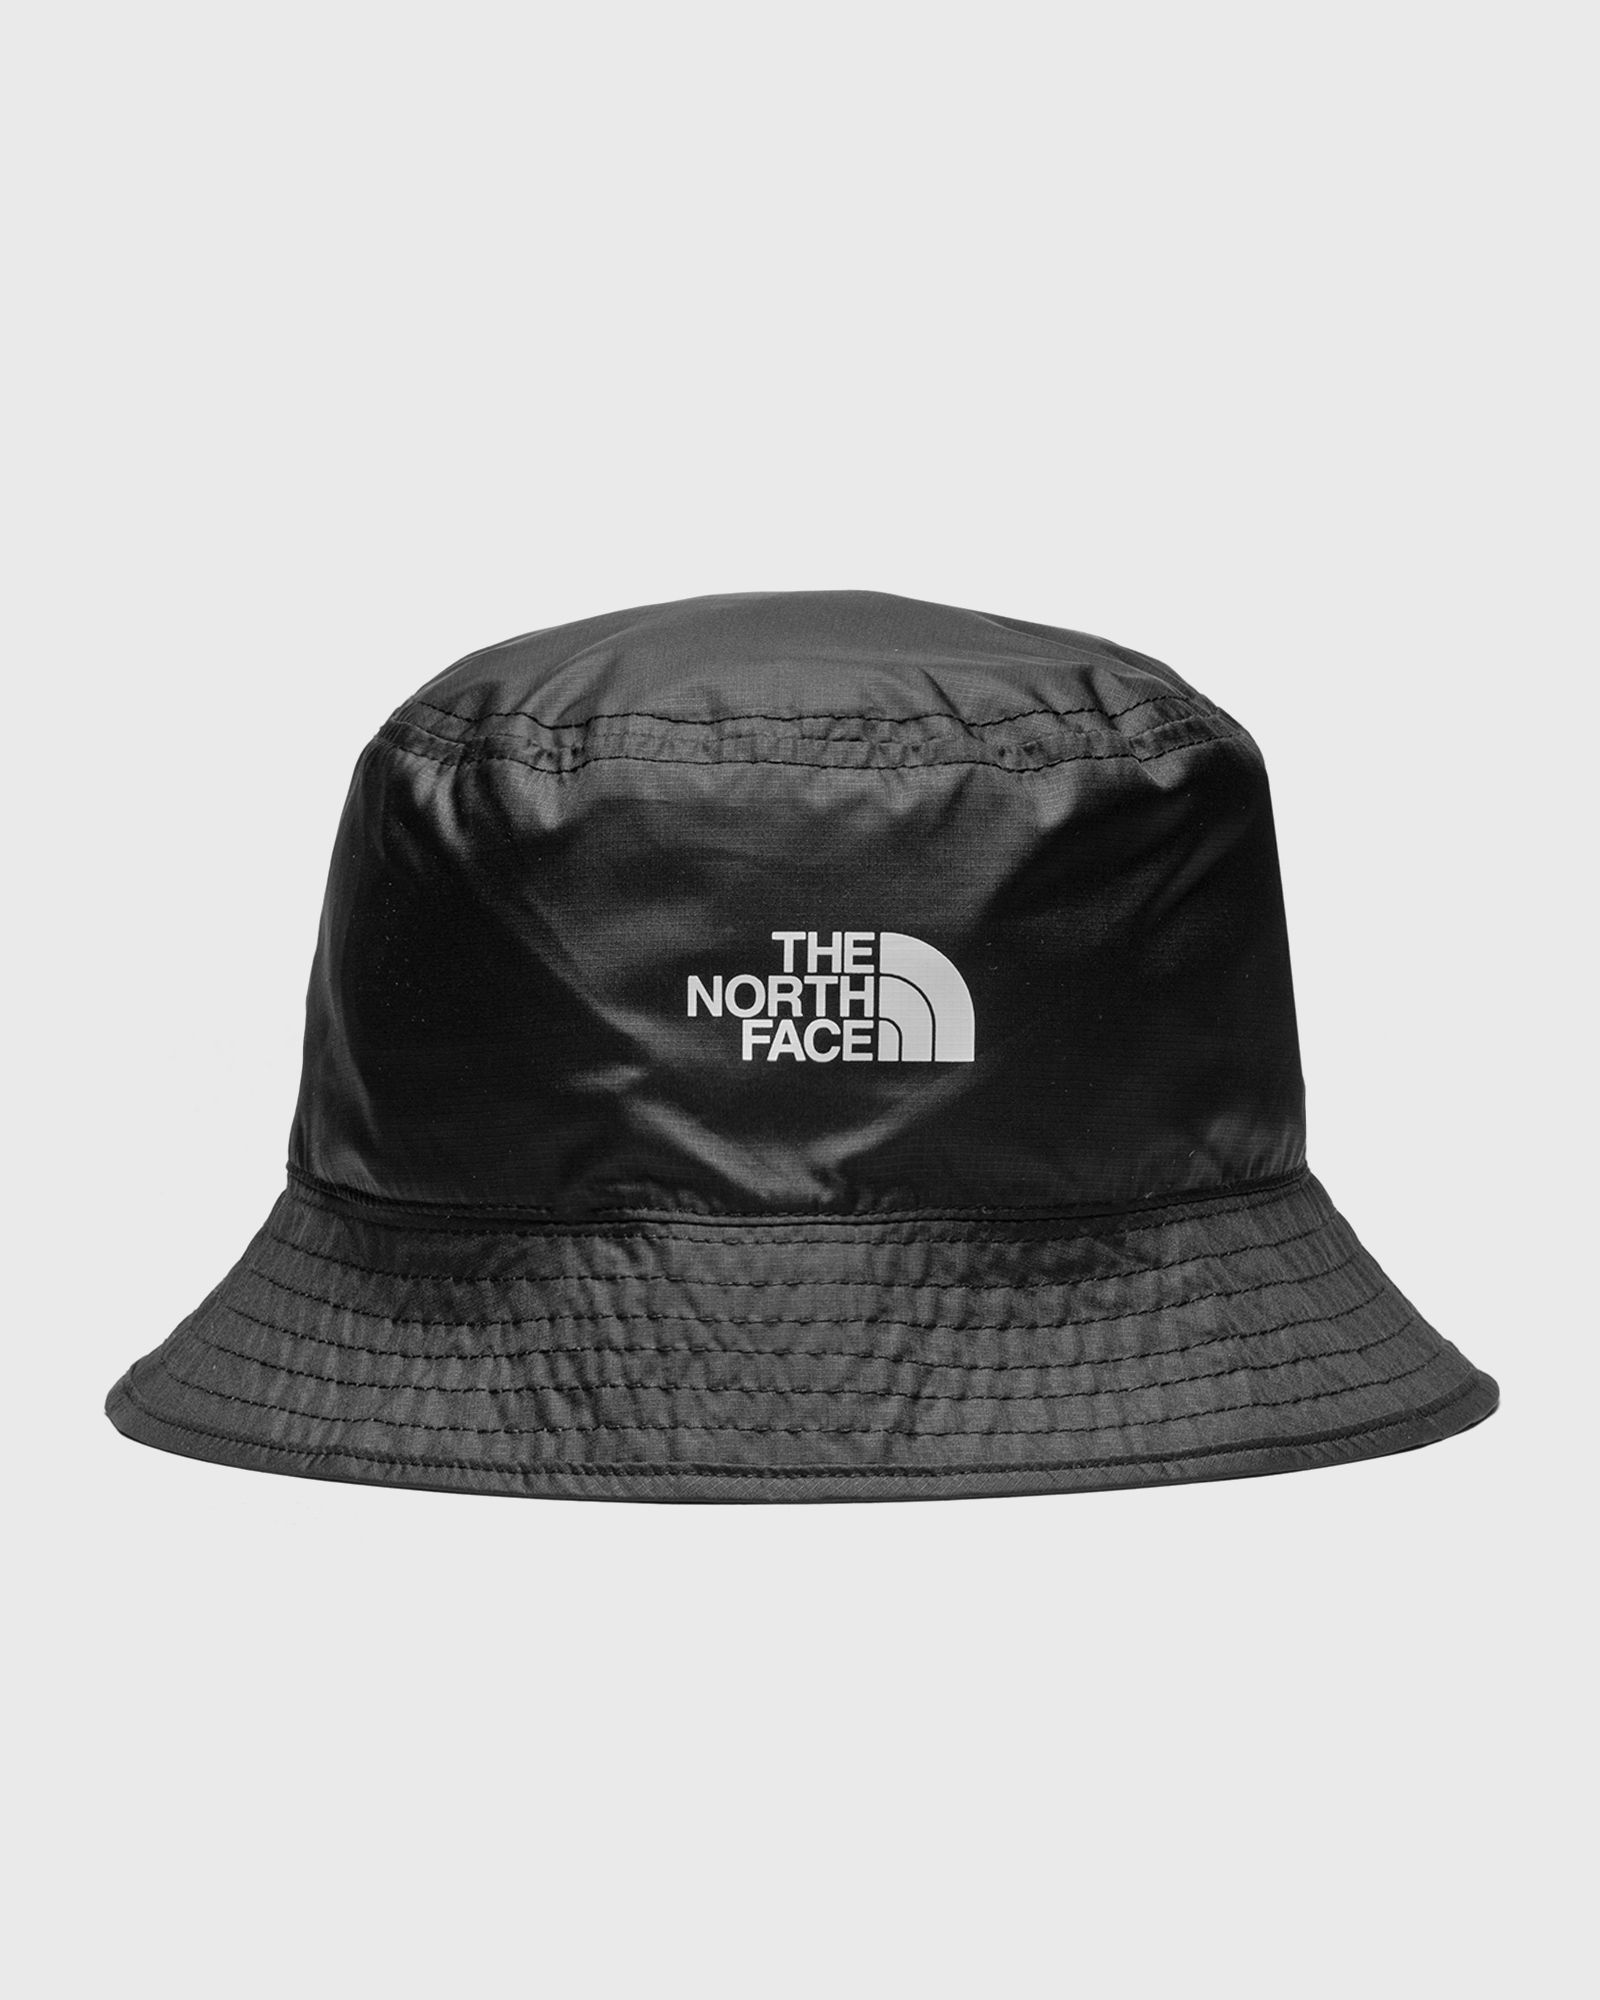 The North Face - sun stash hat men hats black in größe:l/xl